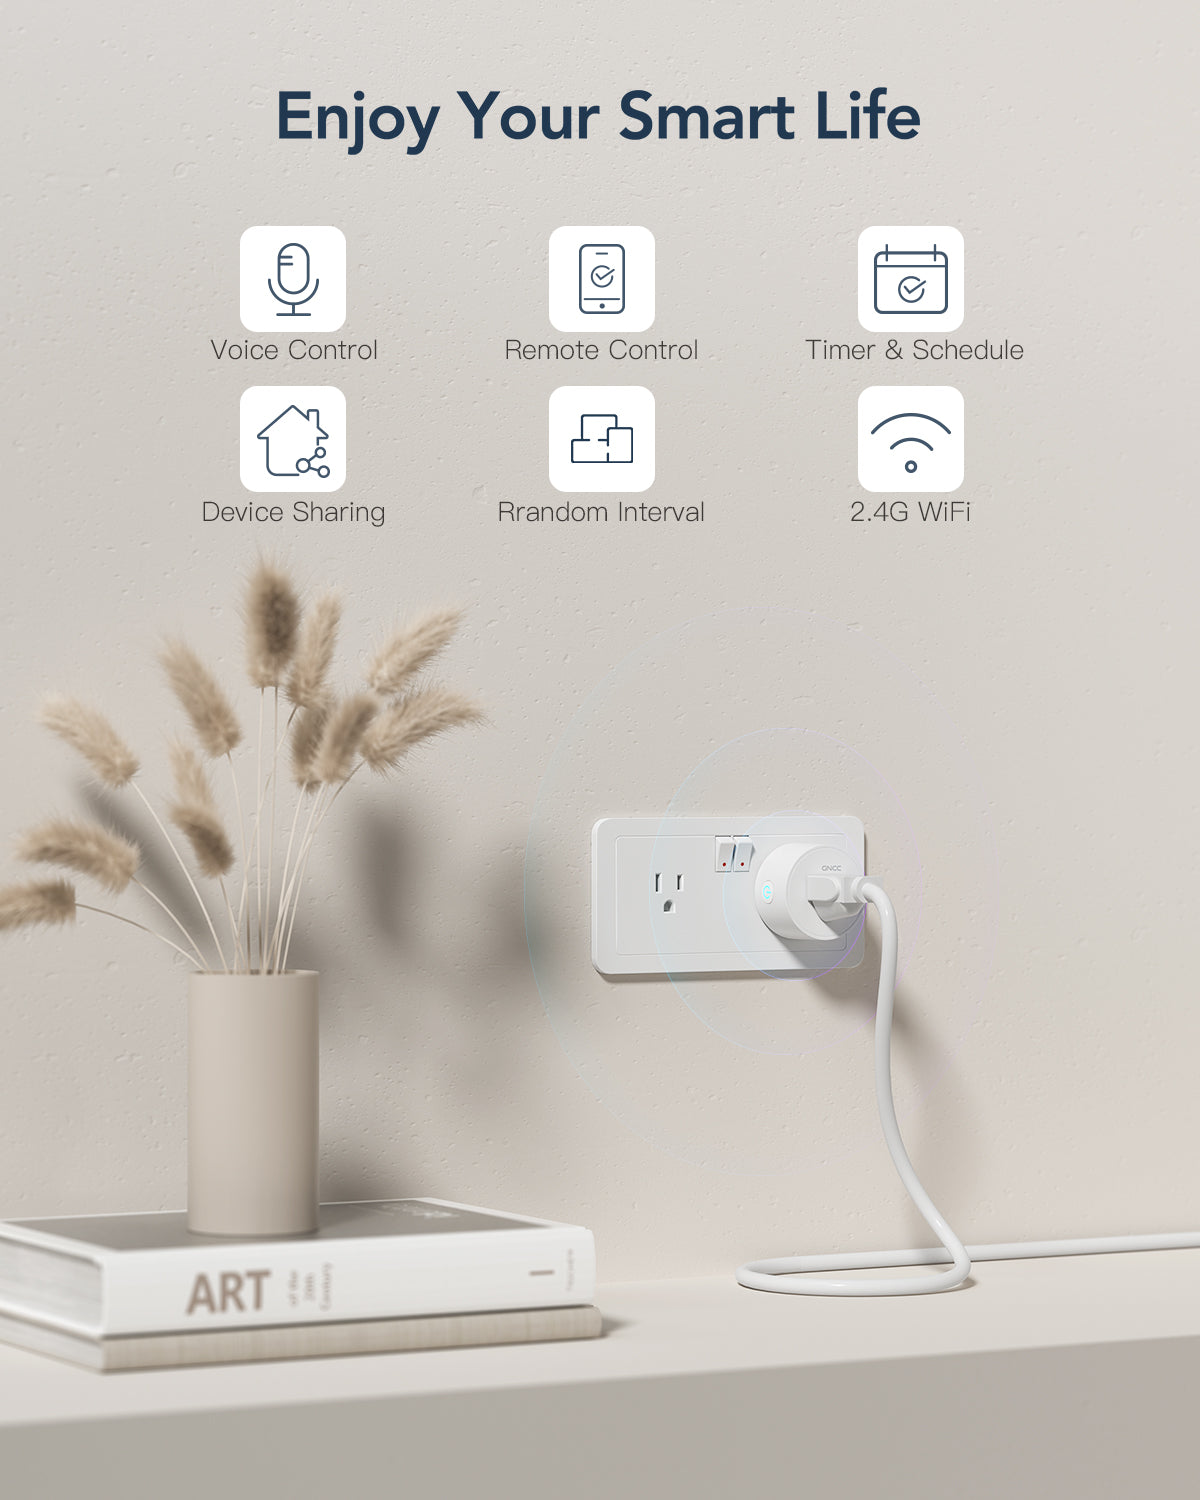 GNCC GSP01 10A Wifi Smart Plug Works with Alexa, Google Home